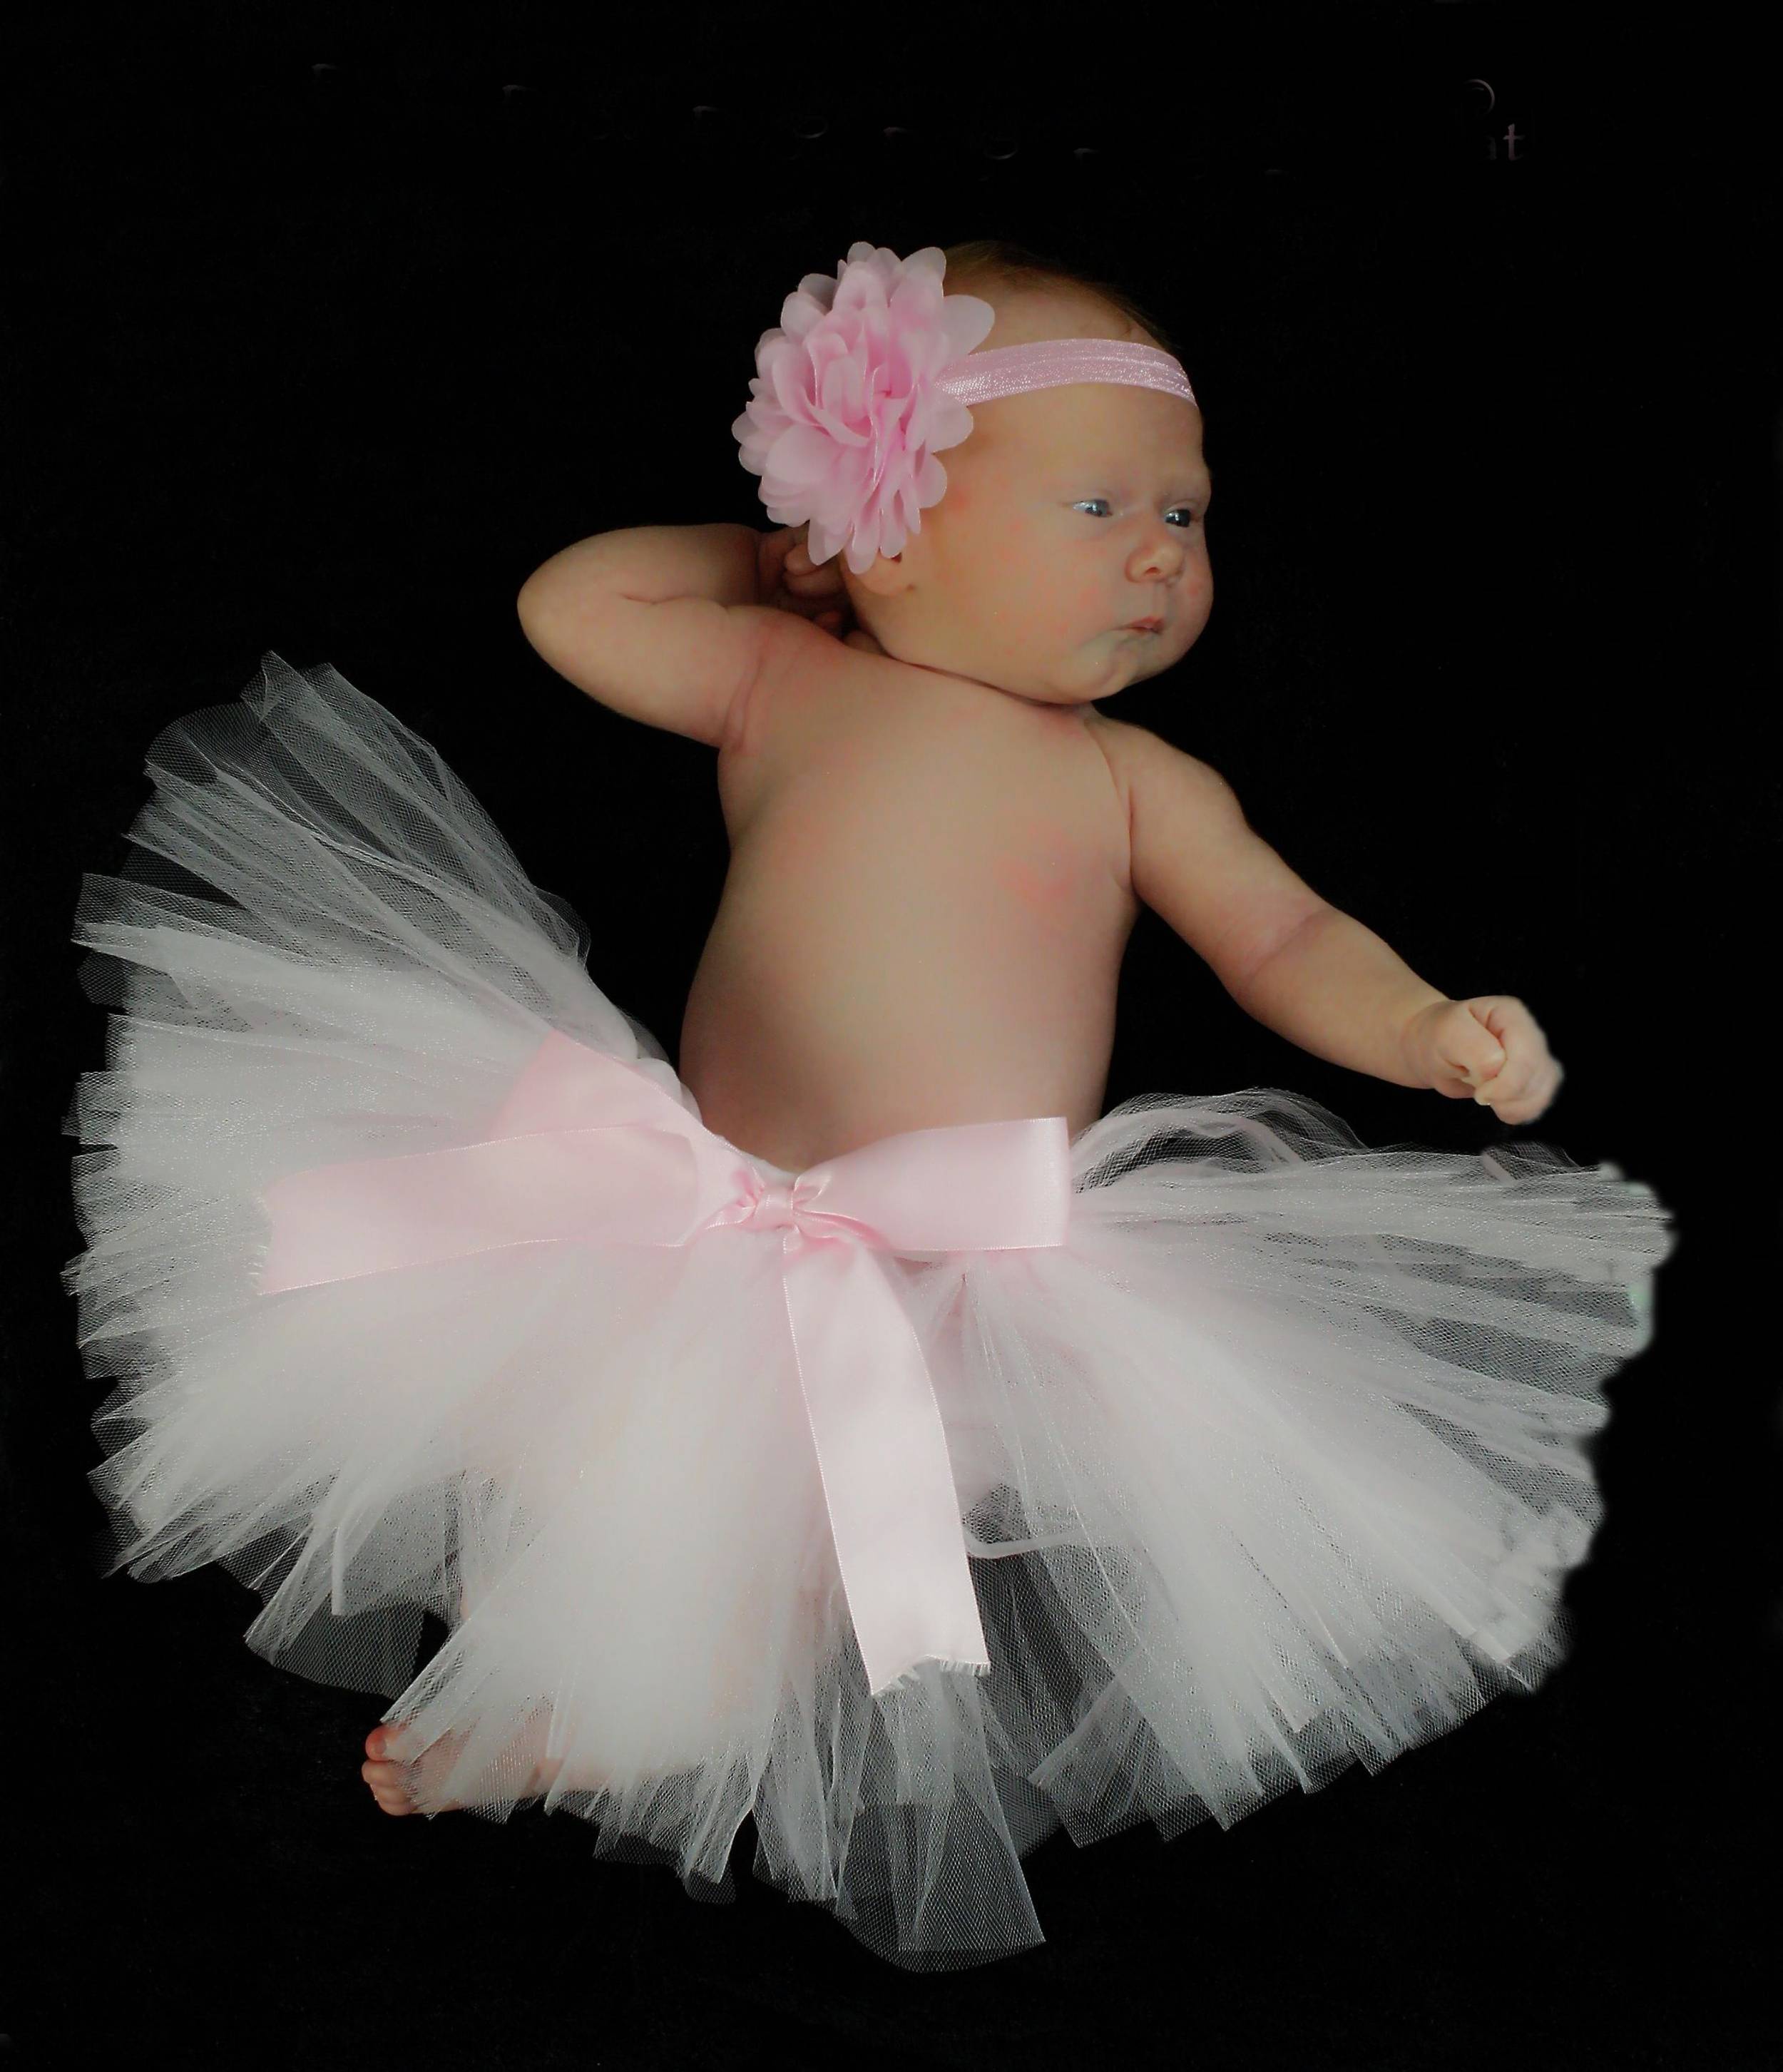 Happix-fotograaf-Nathalie-Joan-Veenendaal-Newborn-_-Baby-fotografie-093_n-1WJ-0Q3VC.jpg